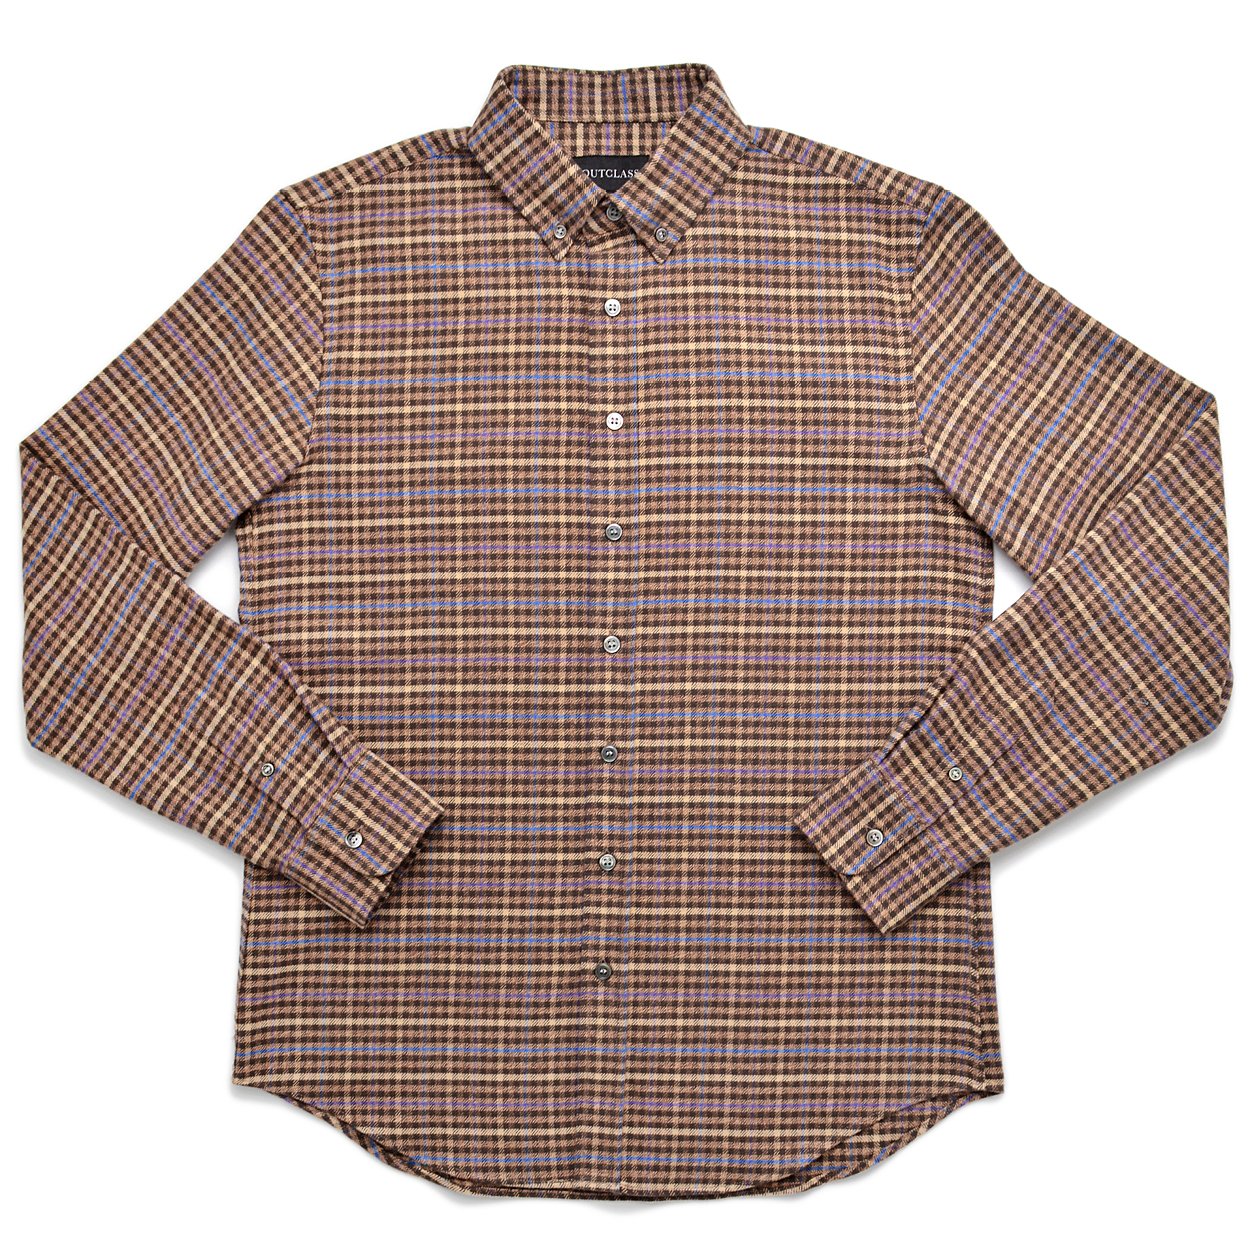 Brown Twill Check Flannel